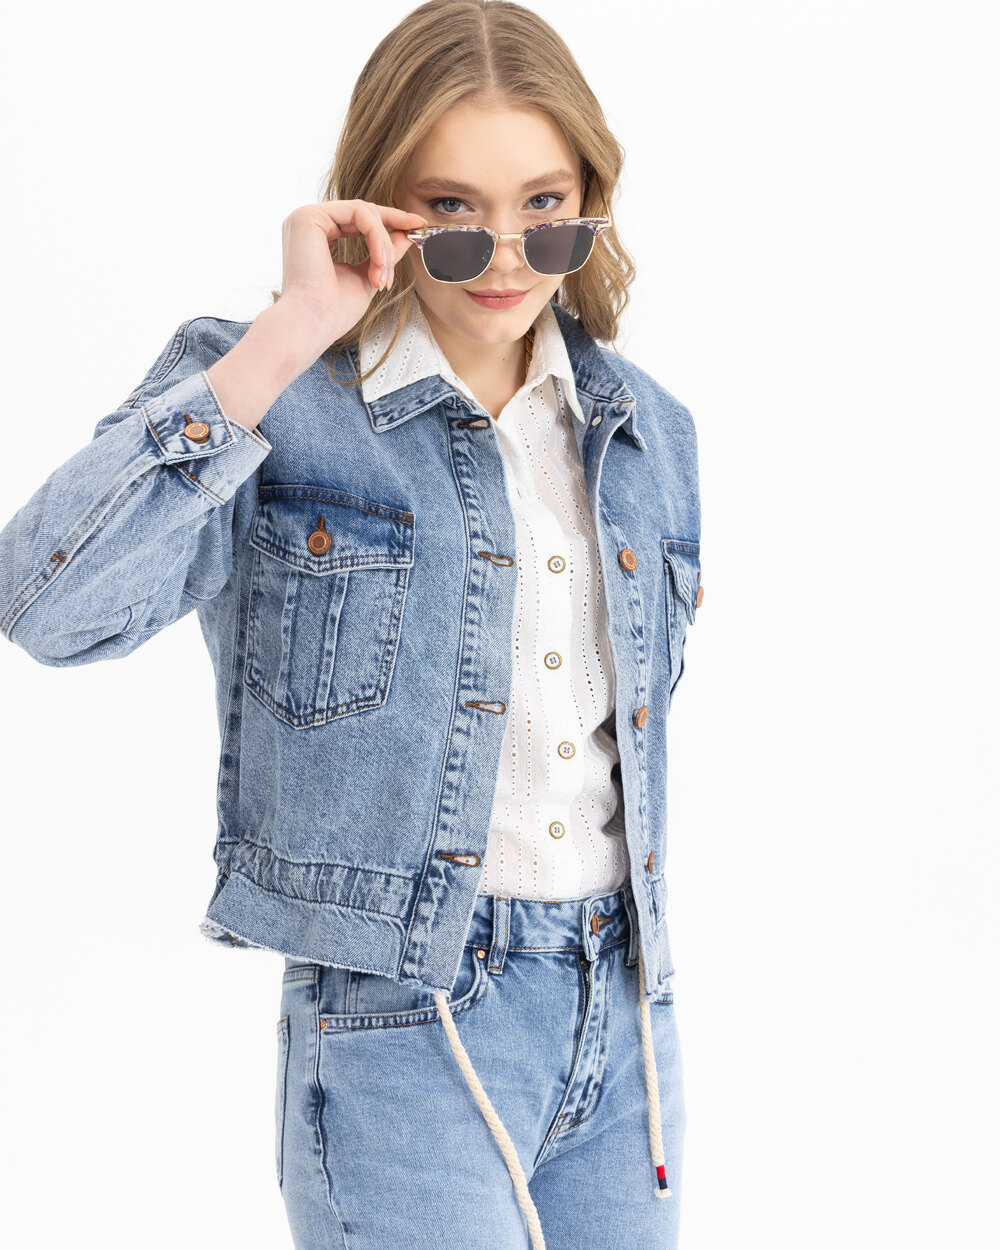 Vedolay Jean Jackets Women's Slim Fit Button Down Long Sleeve Fashion  Casual Denim Jackets,Blue XL - Walmart.com